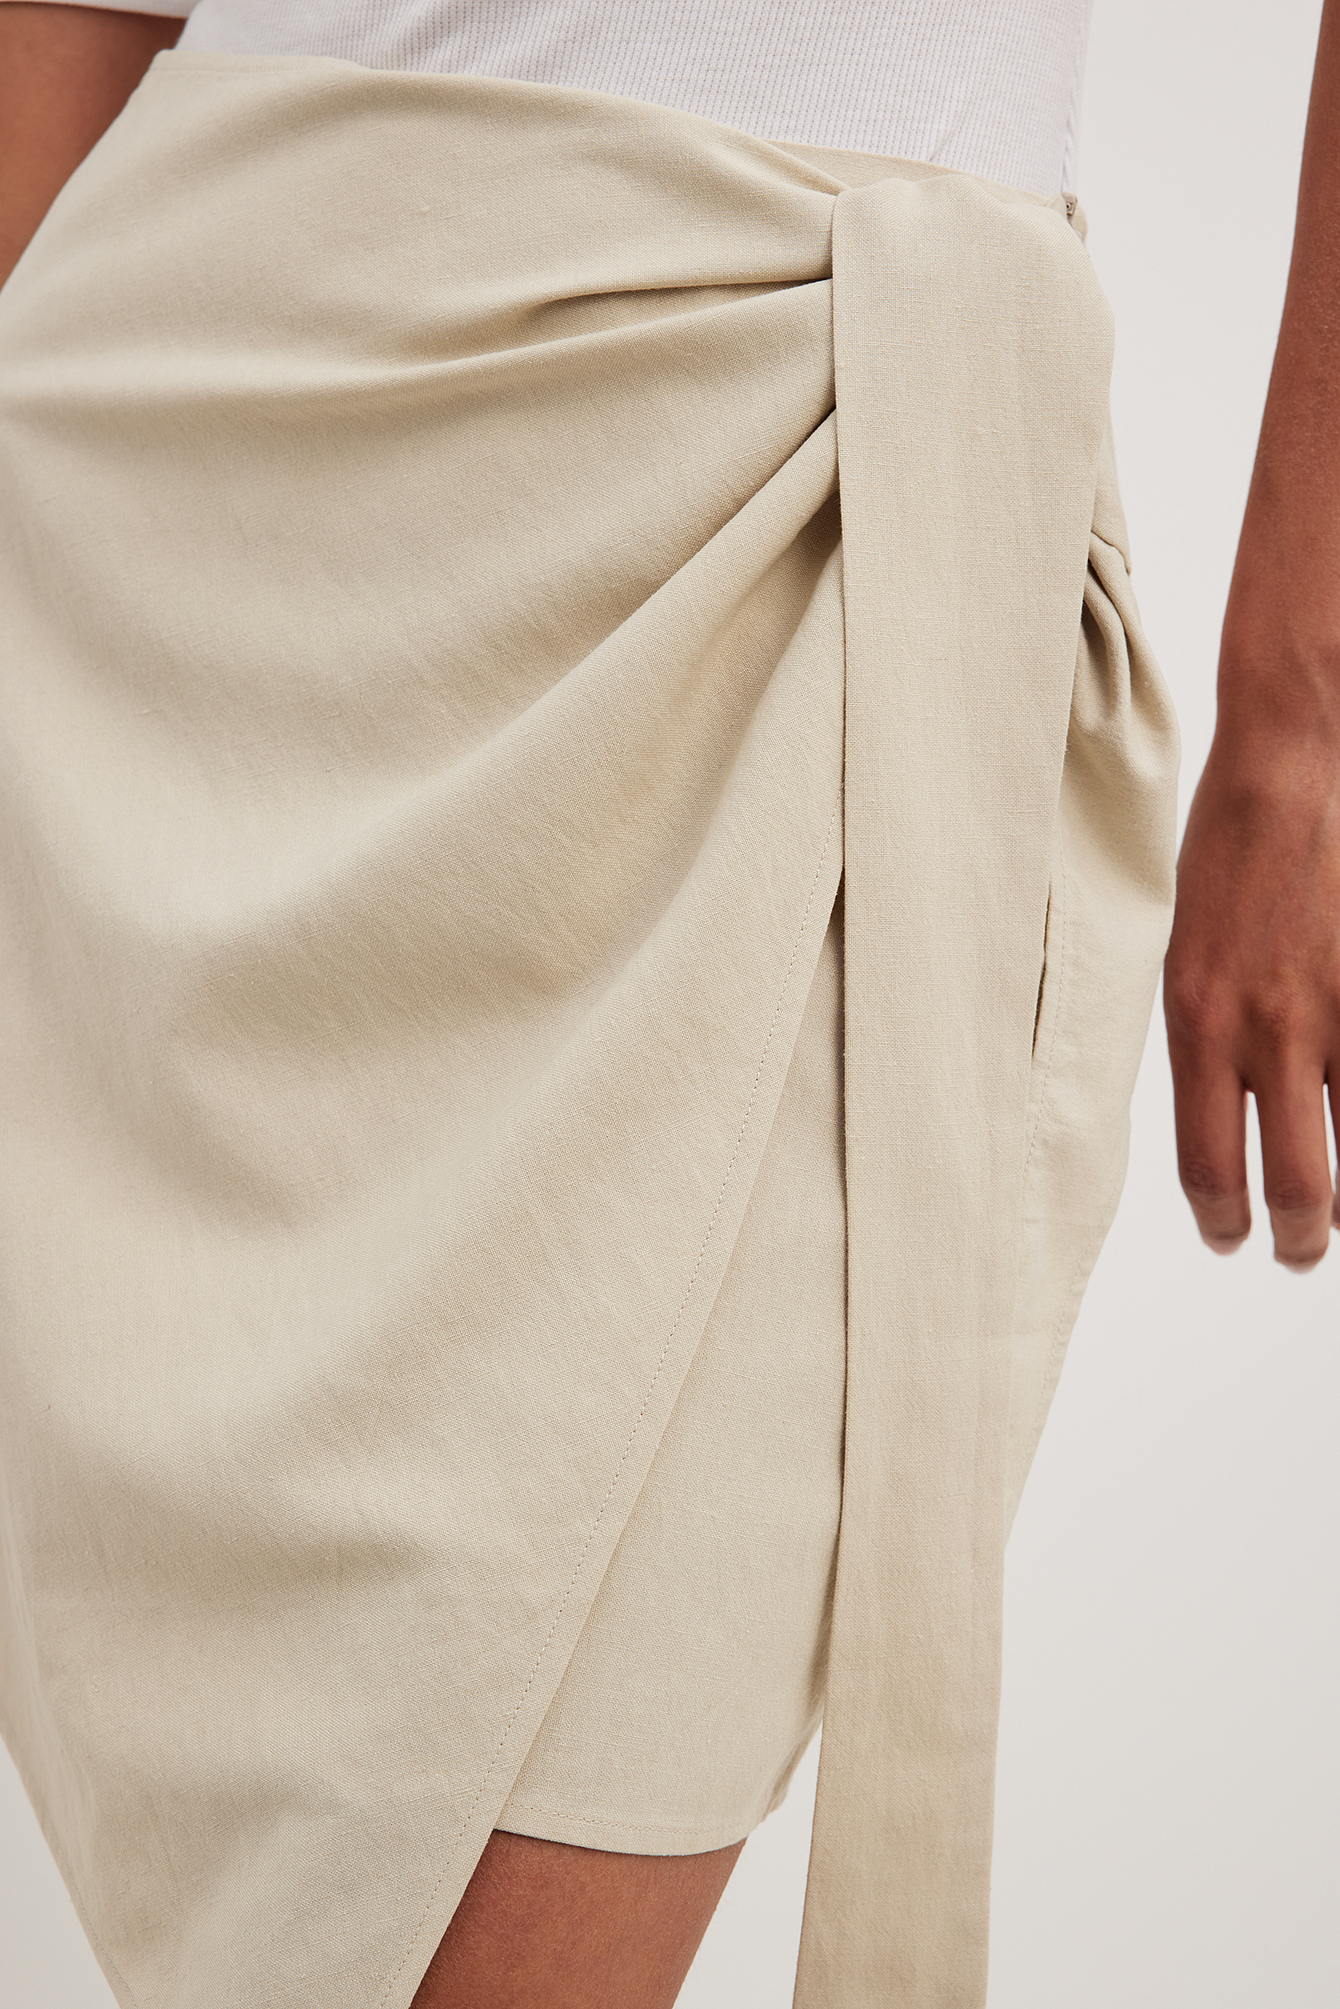 Inddus Beige Solid Micro Fiber Slimming Skirt Shapewear - Inddus